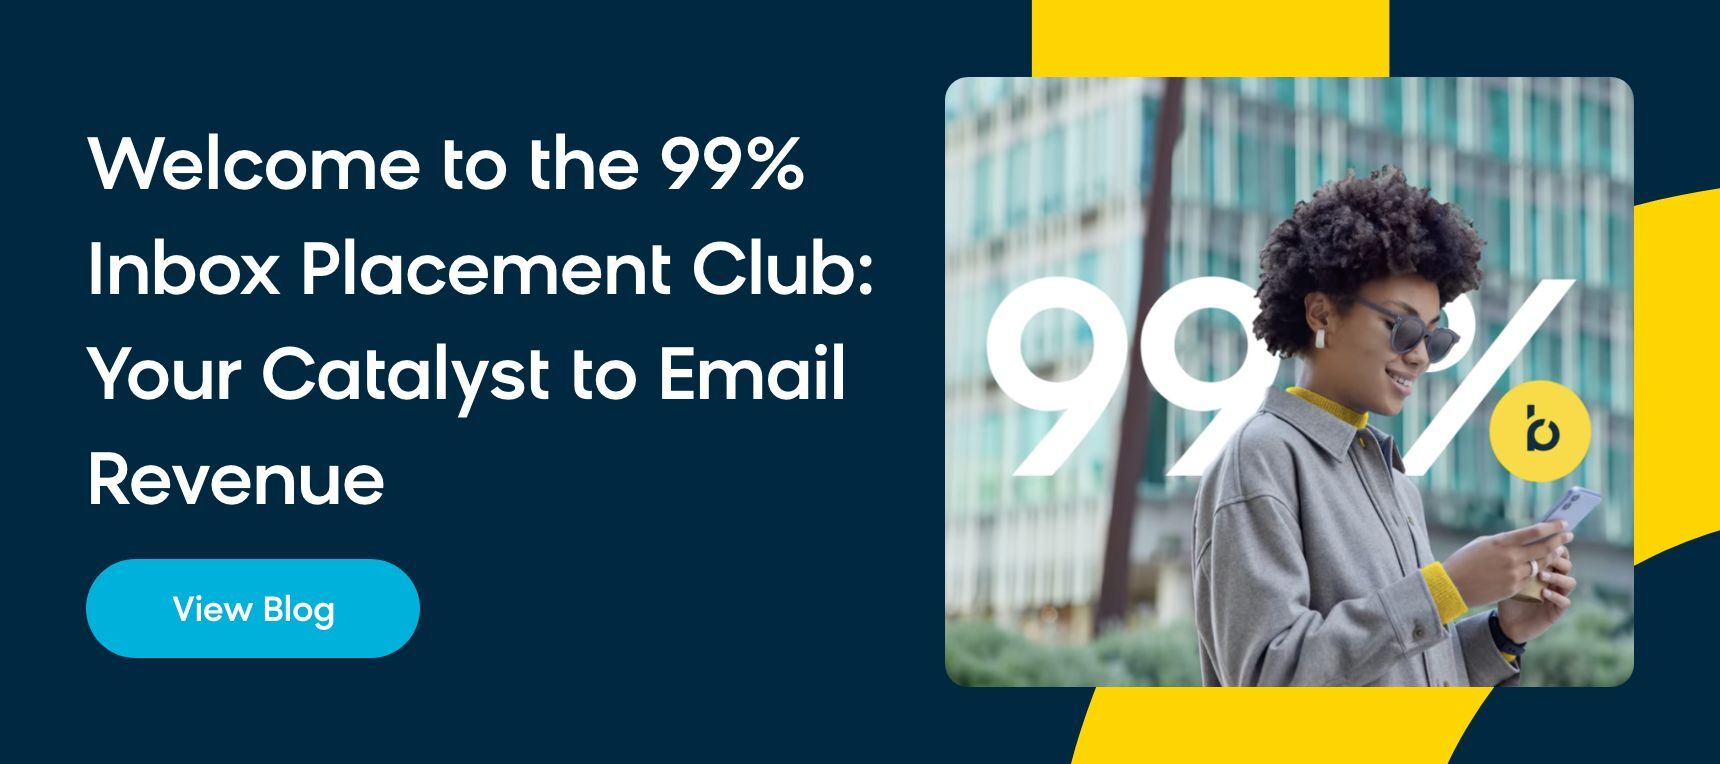 99% Inbox Placement Club